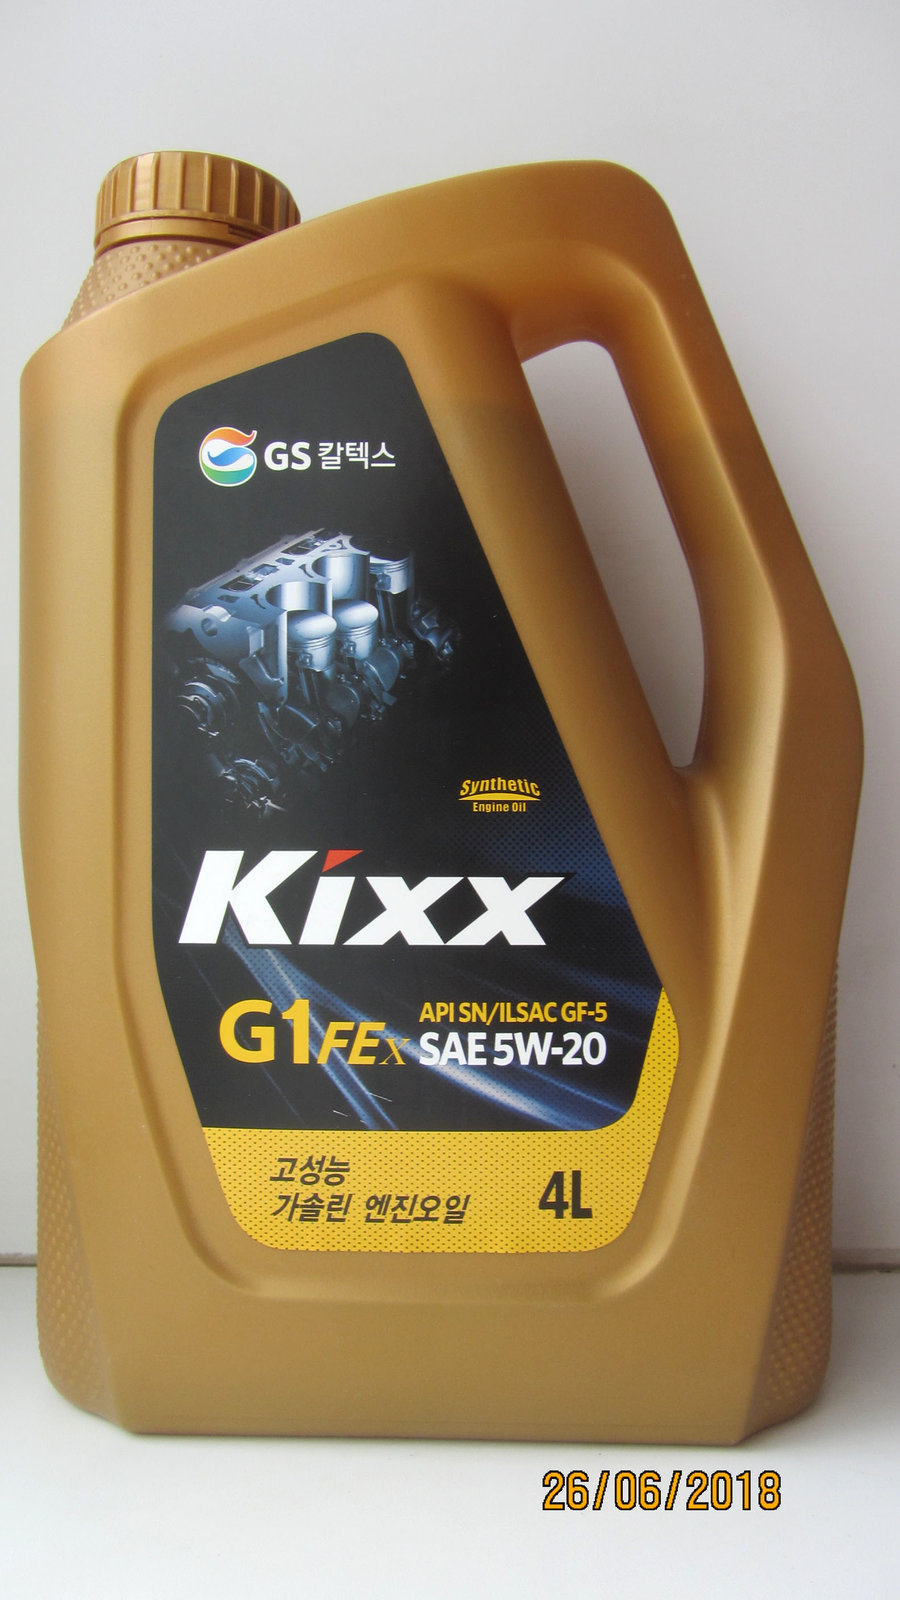 Api sh масло. Kixx g1 FEX 5w-20. Масло Kixx 5w-30 ILSAC gf5 артикул. Масла с допуском gf4 gf5. Kixx 5w20 SN Plus.